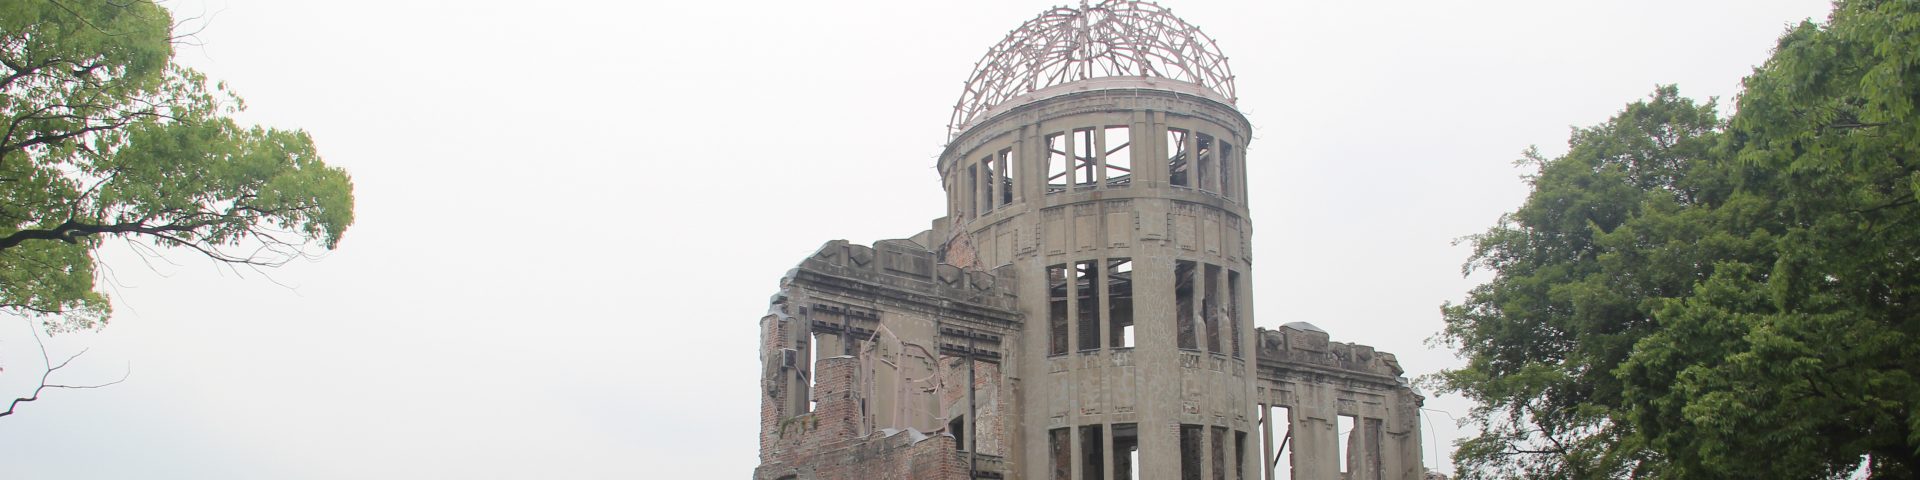 Hiroshima Atom Bomb Dome